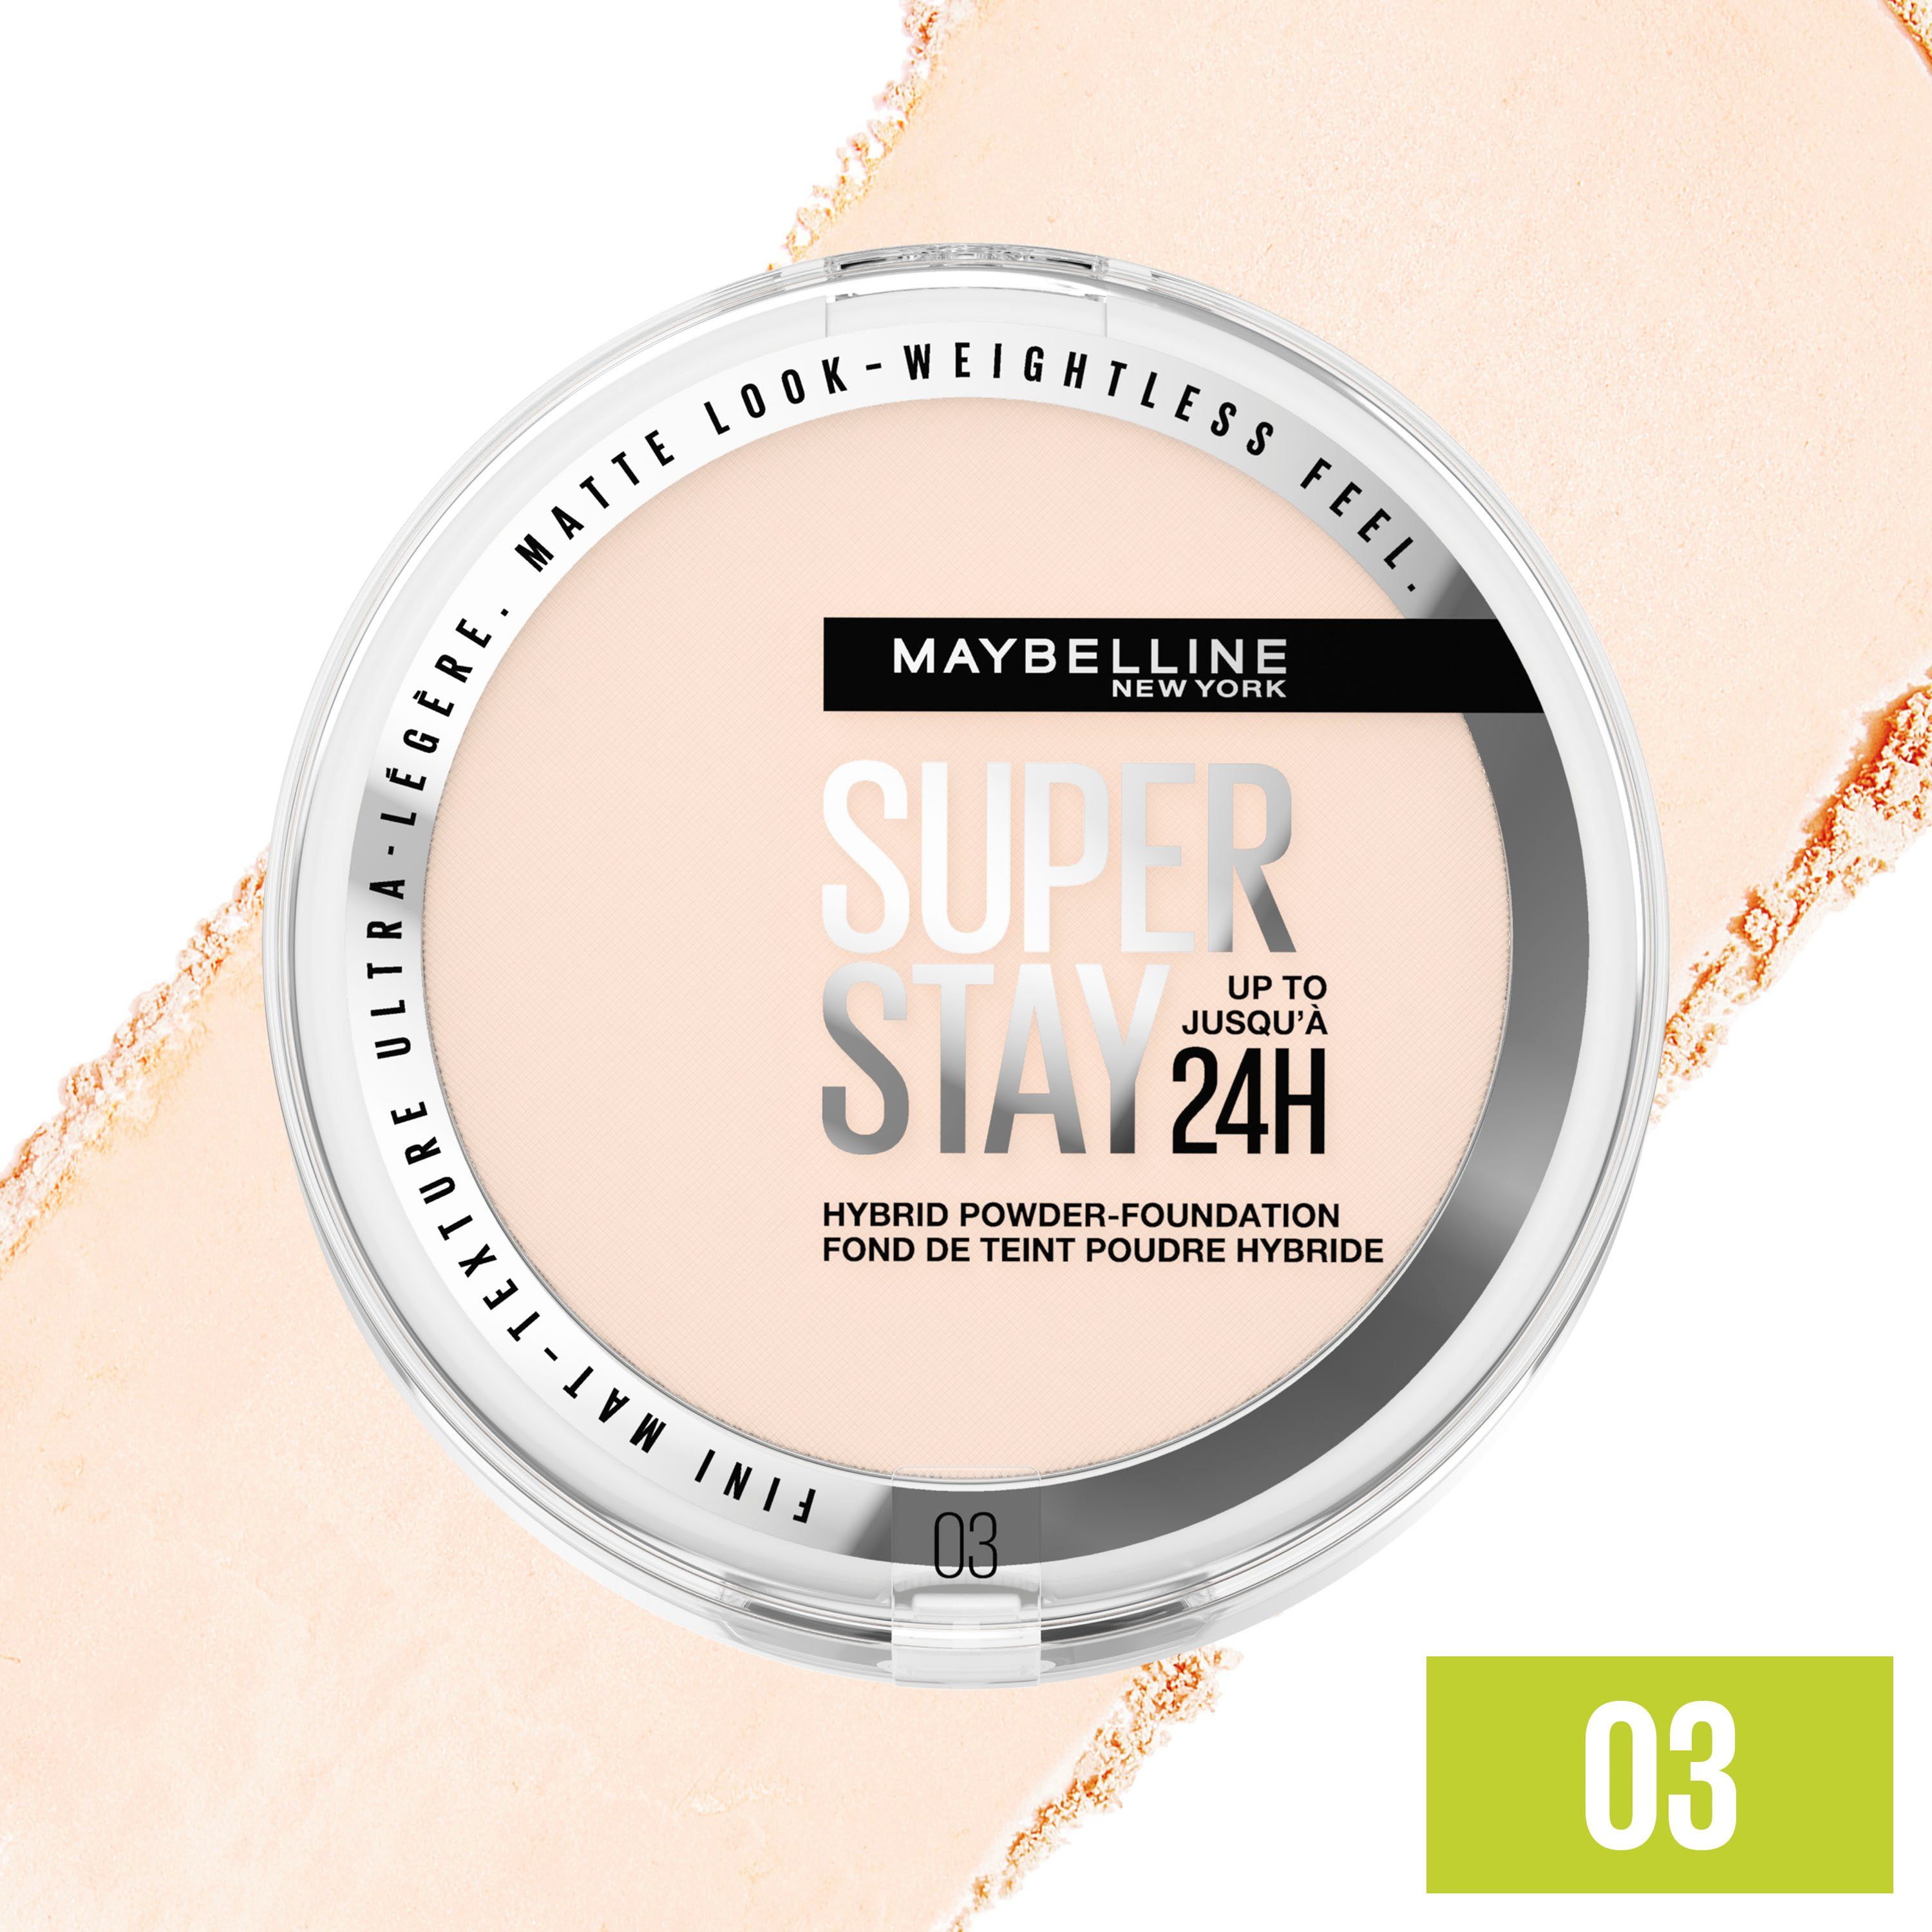 MAYBELLINE NEW YORK Foundation Stay Puder New Maybelline York Hybrides Make-Up Super